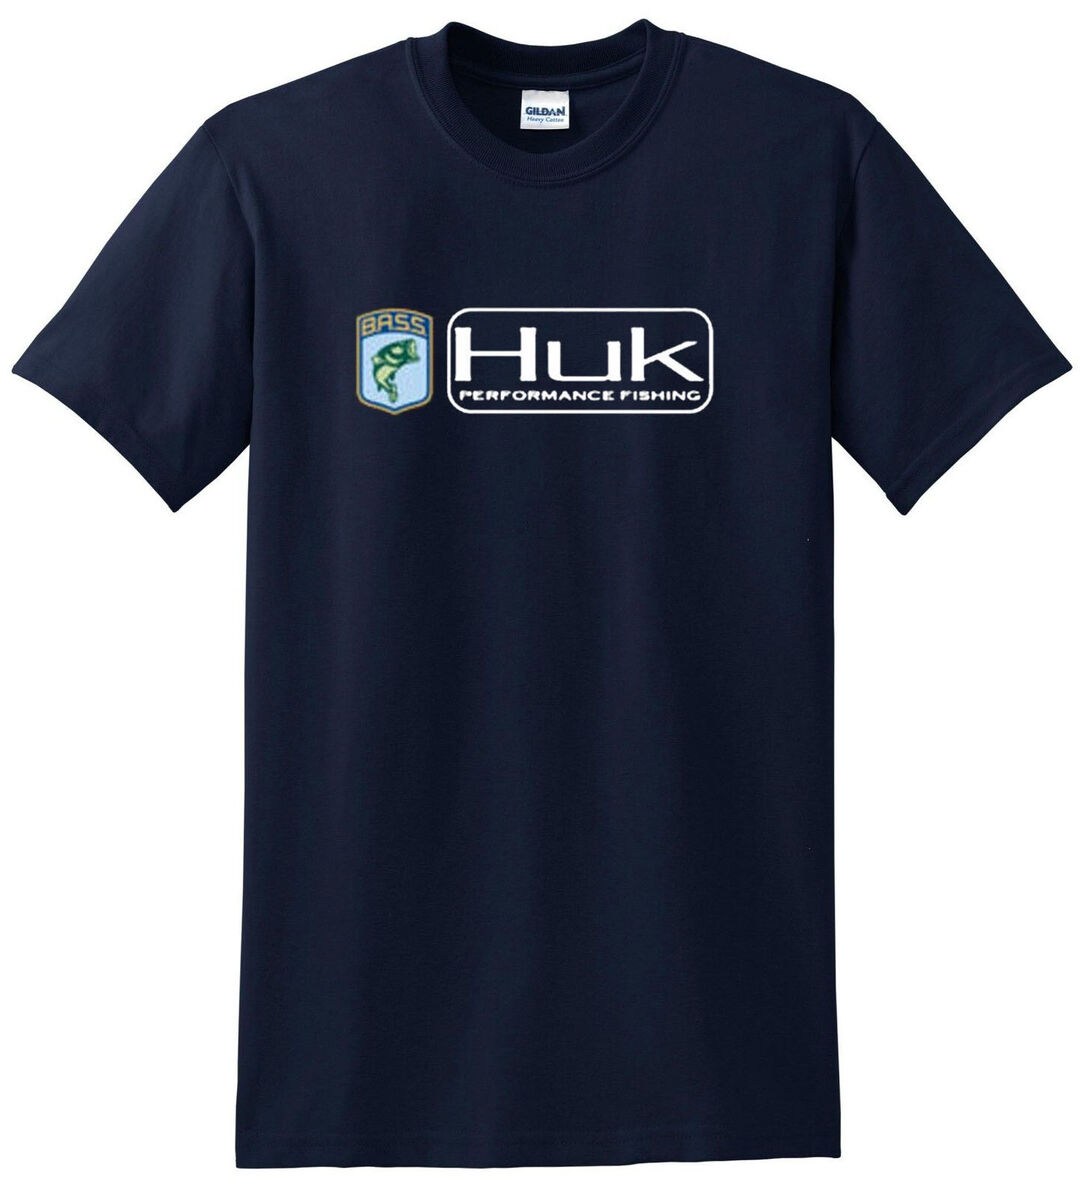 New Shirt HUK Performance Fishing Logo Men's T-Shirt S-3XL